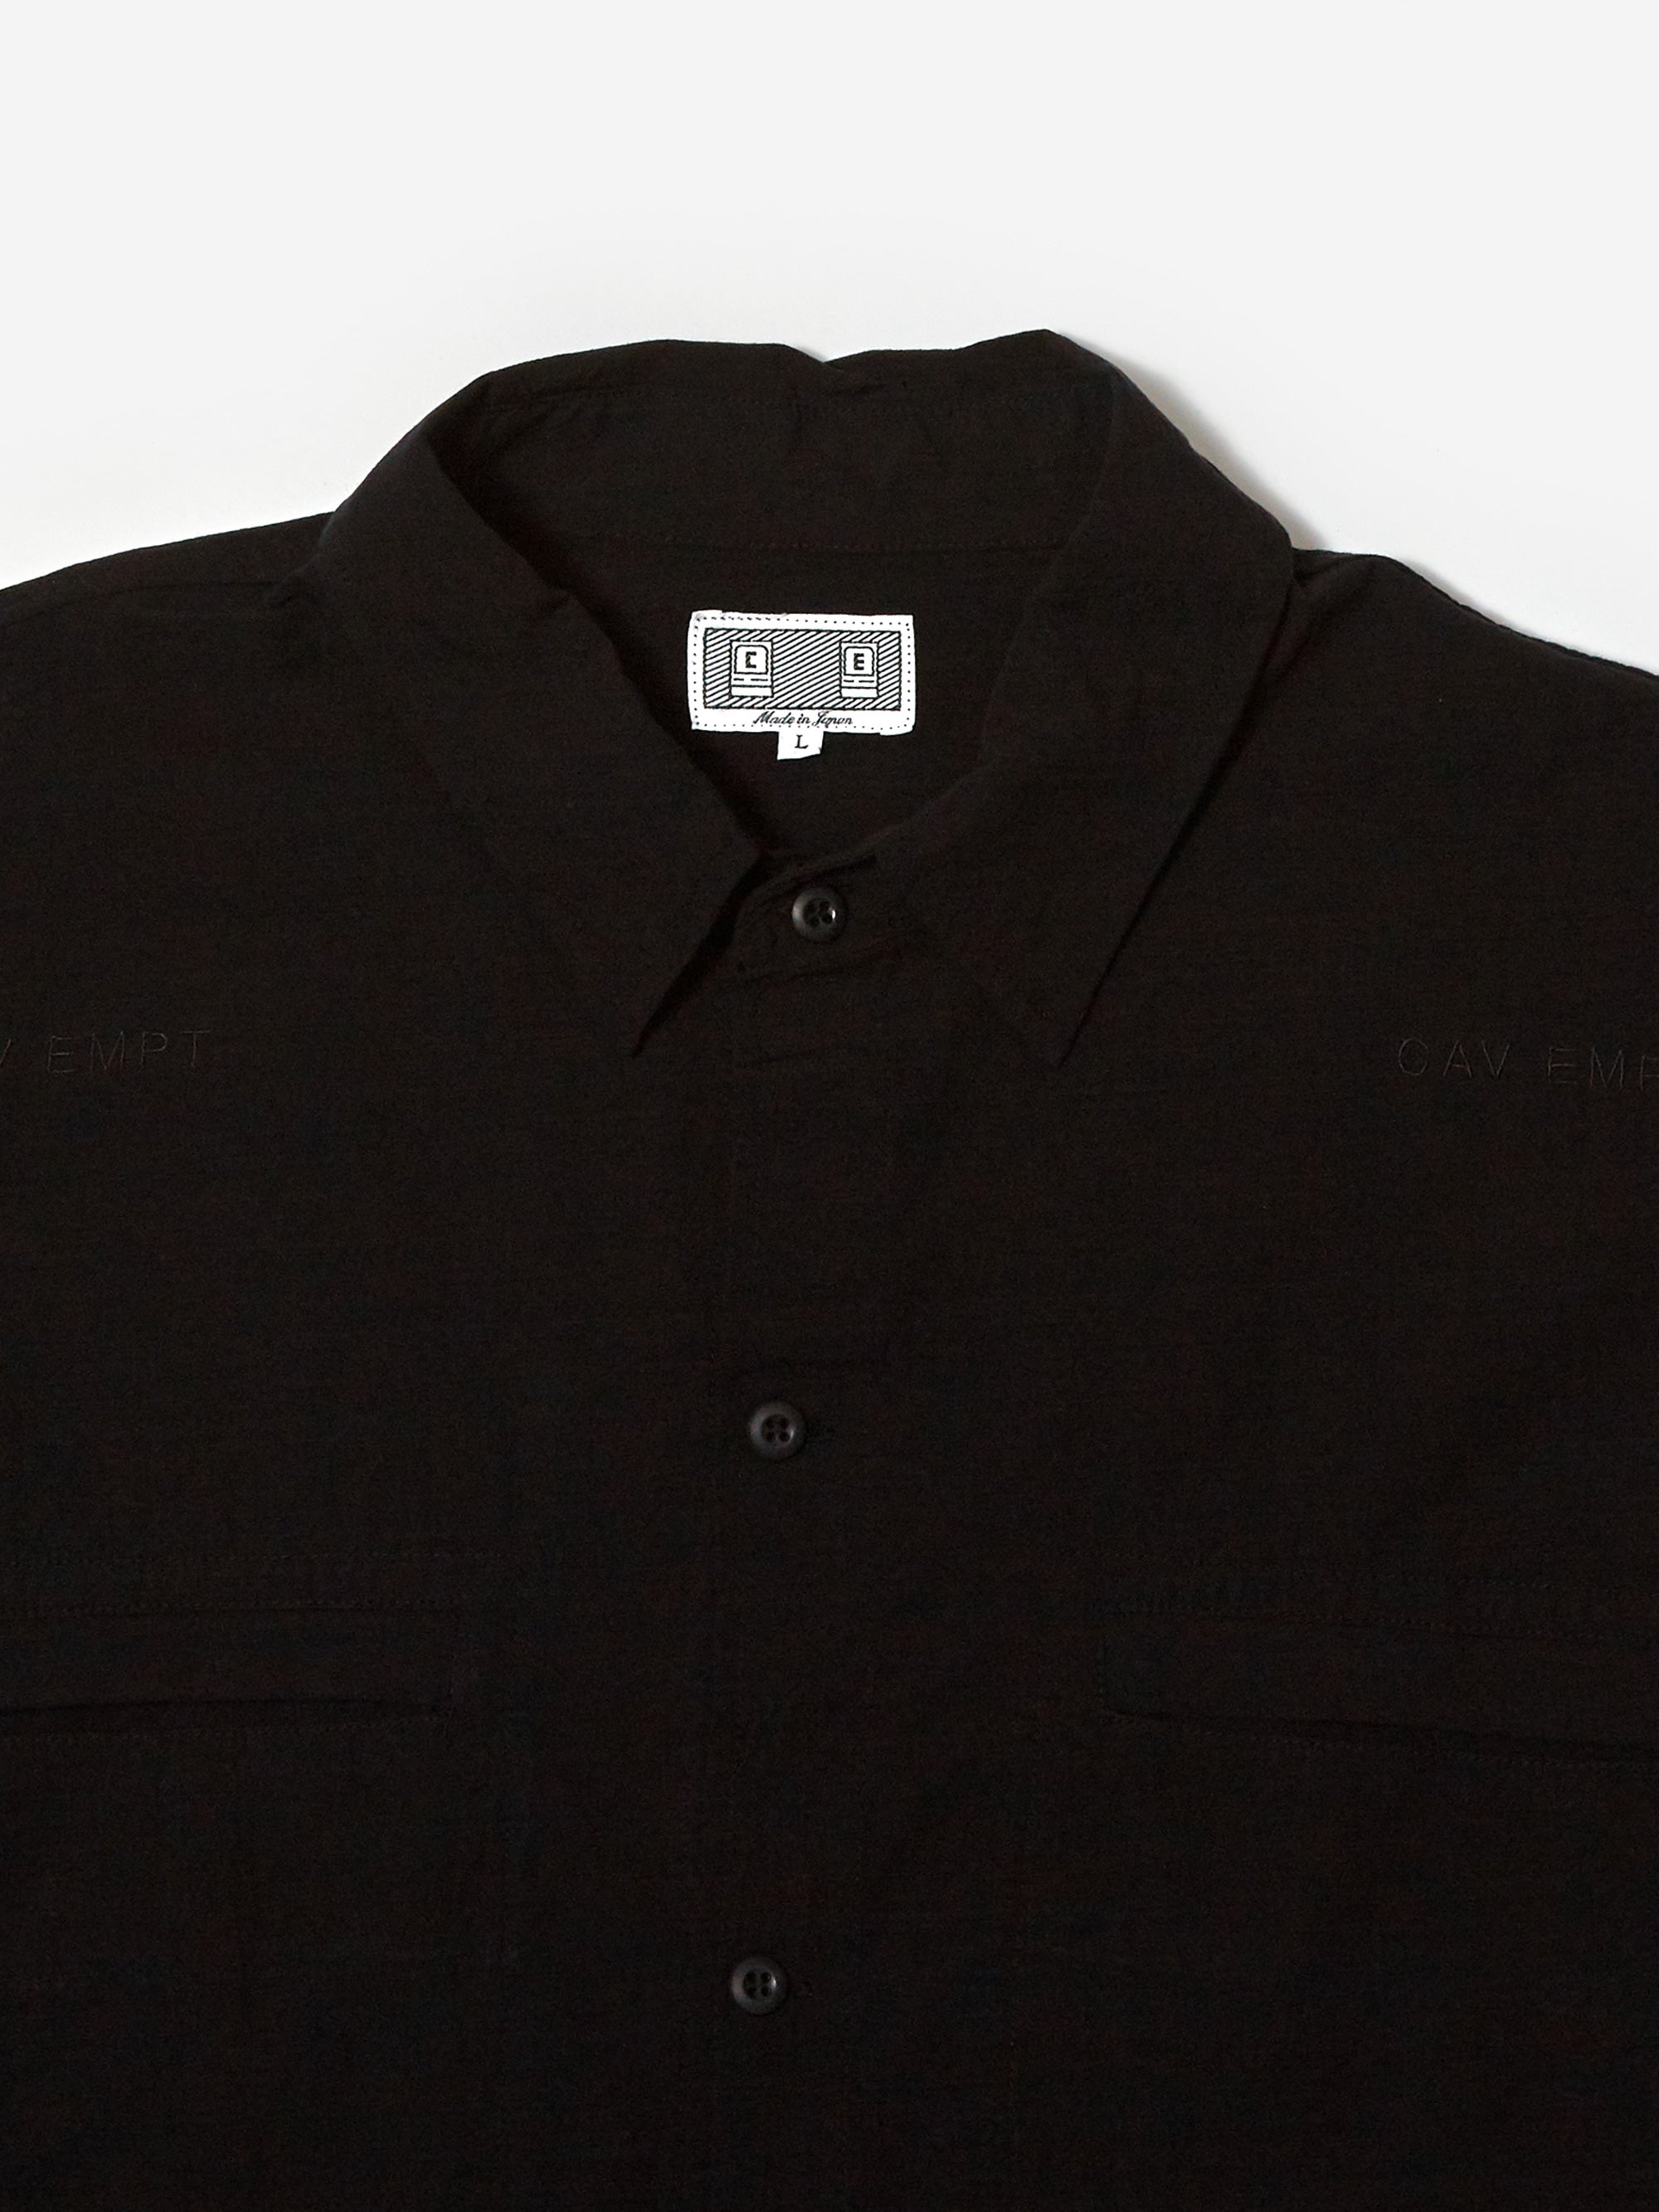 C.E Cav Empt Casual Shirt - Black